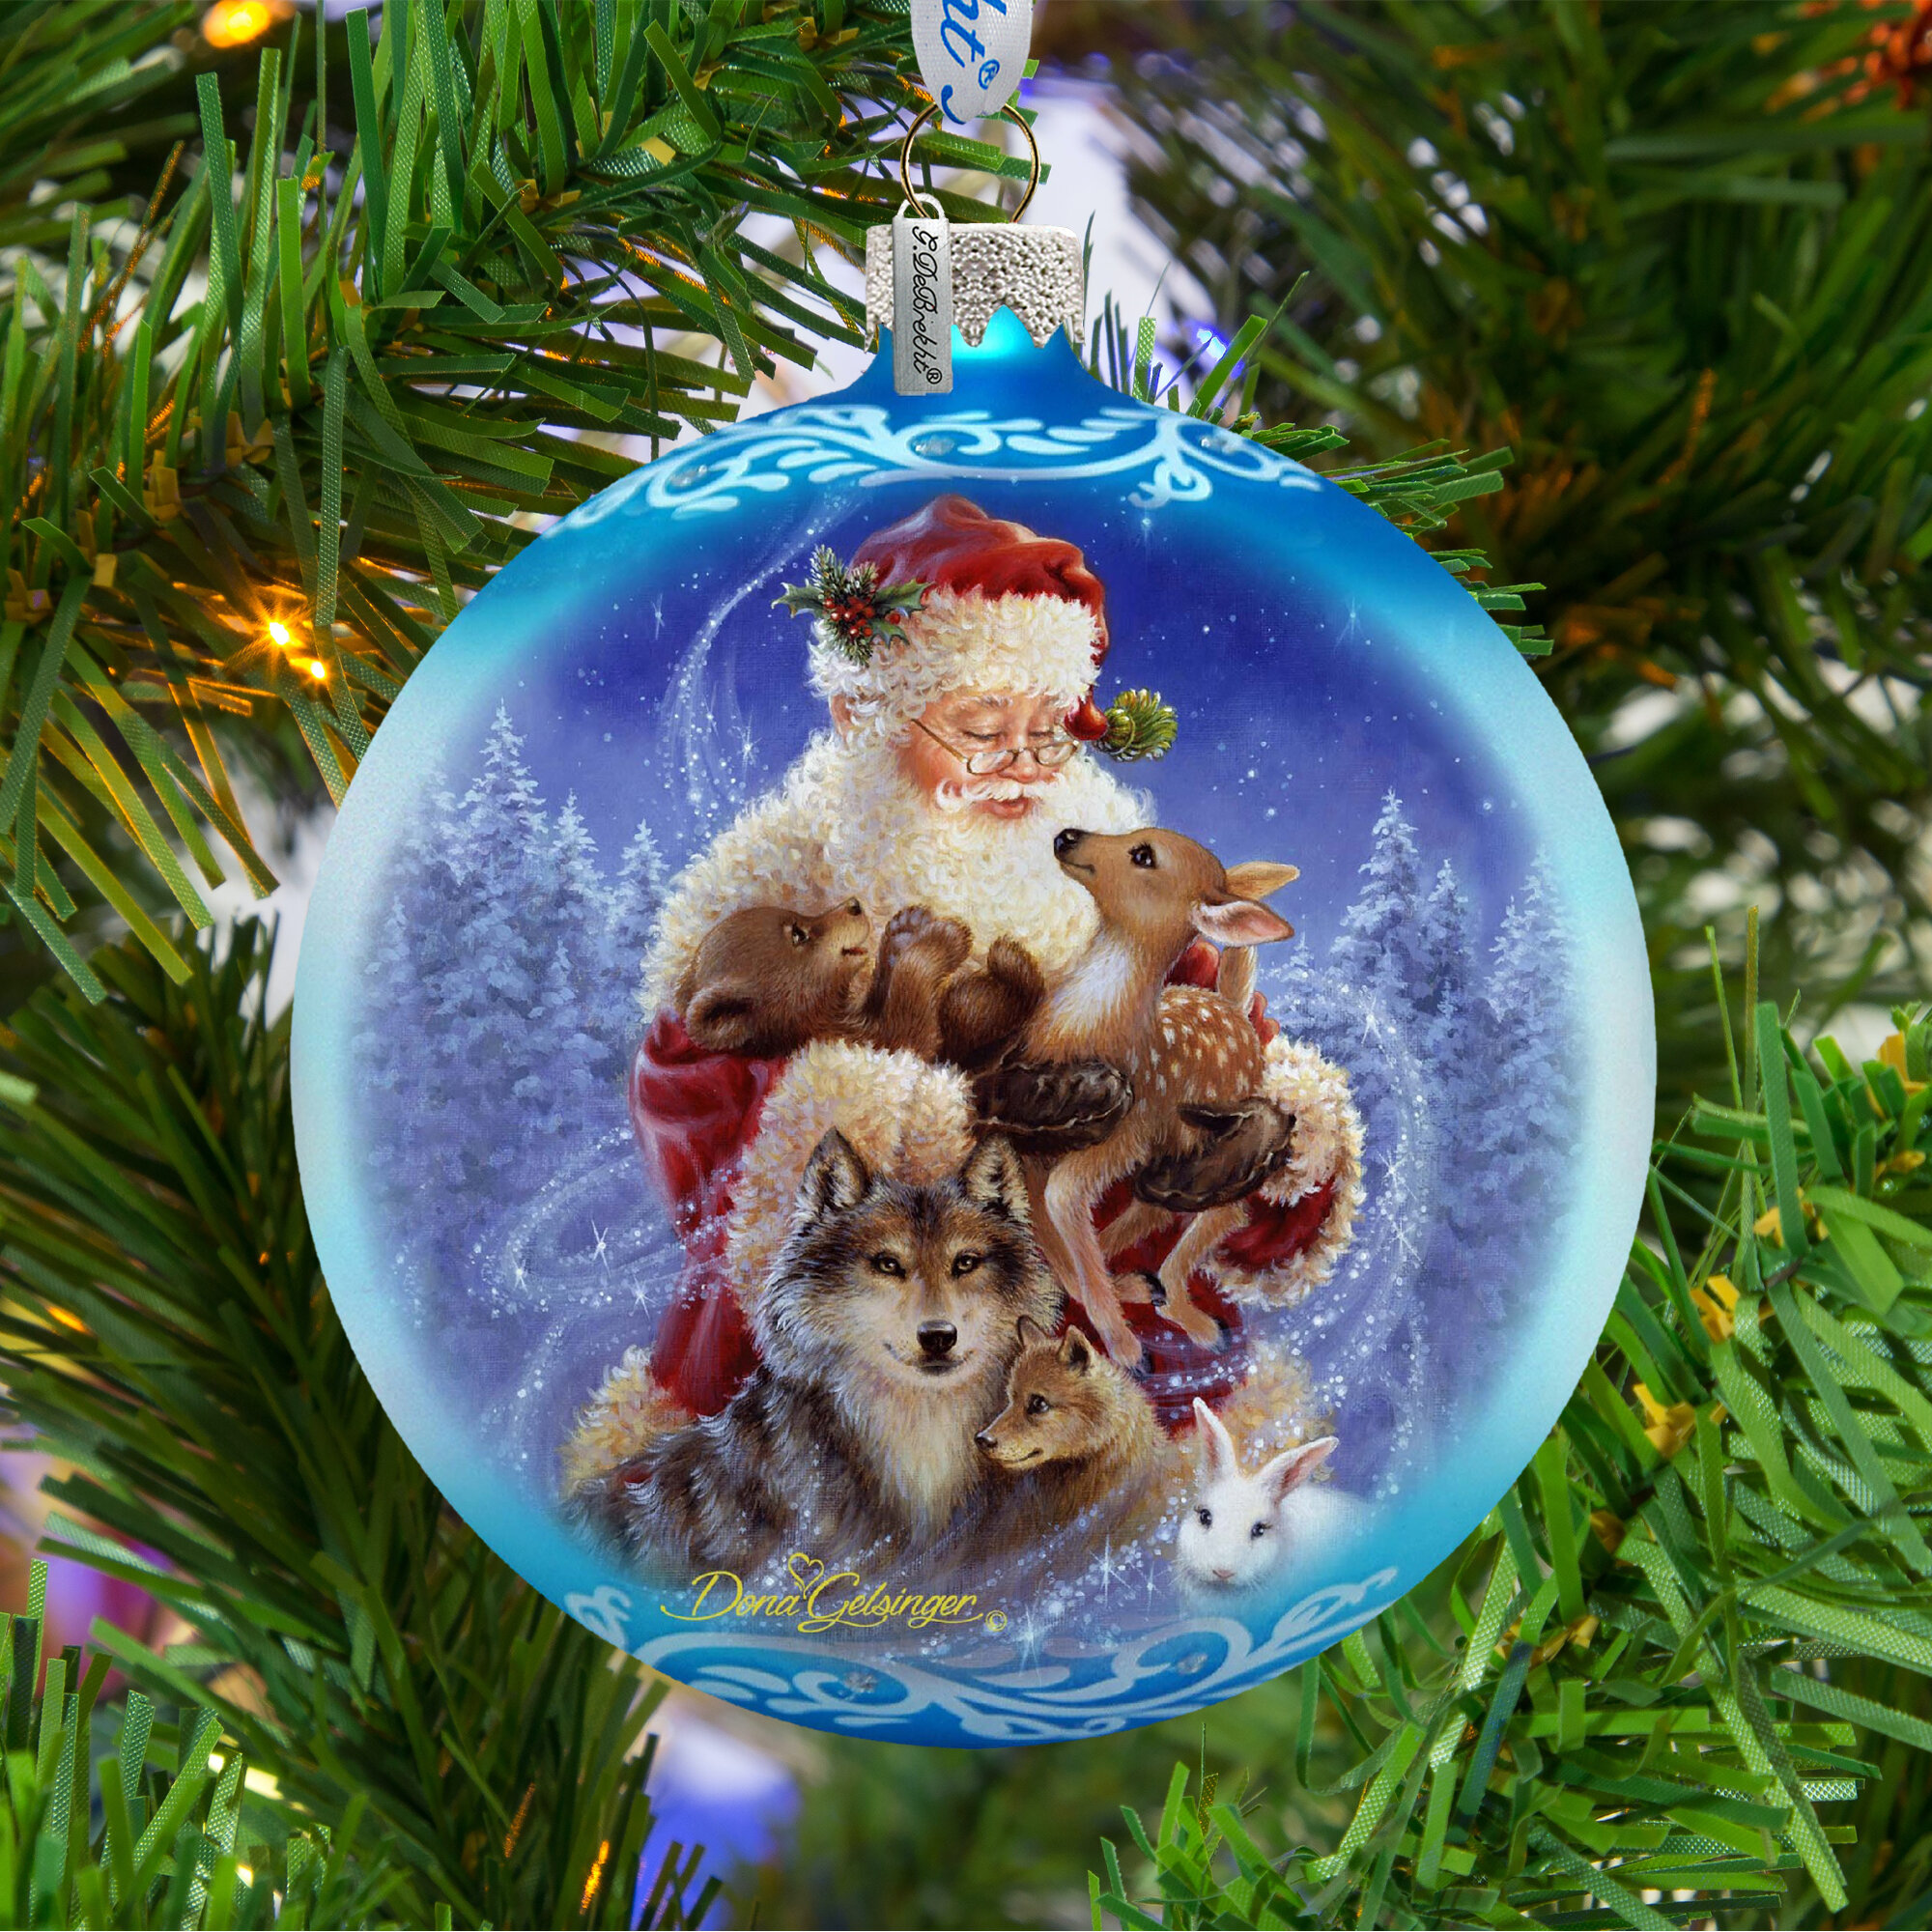 Rebrilliant 12.2'' x 12.2'' x12.2'' Christmas Ornament Storage & Reviews